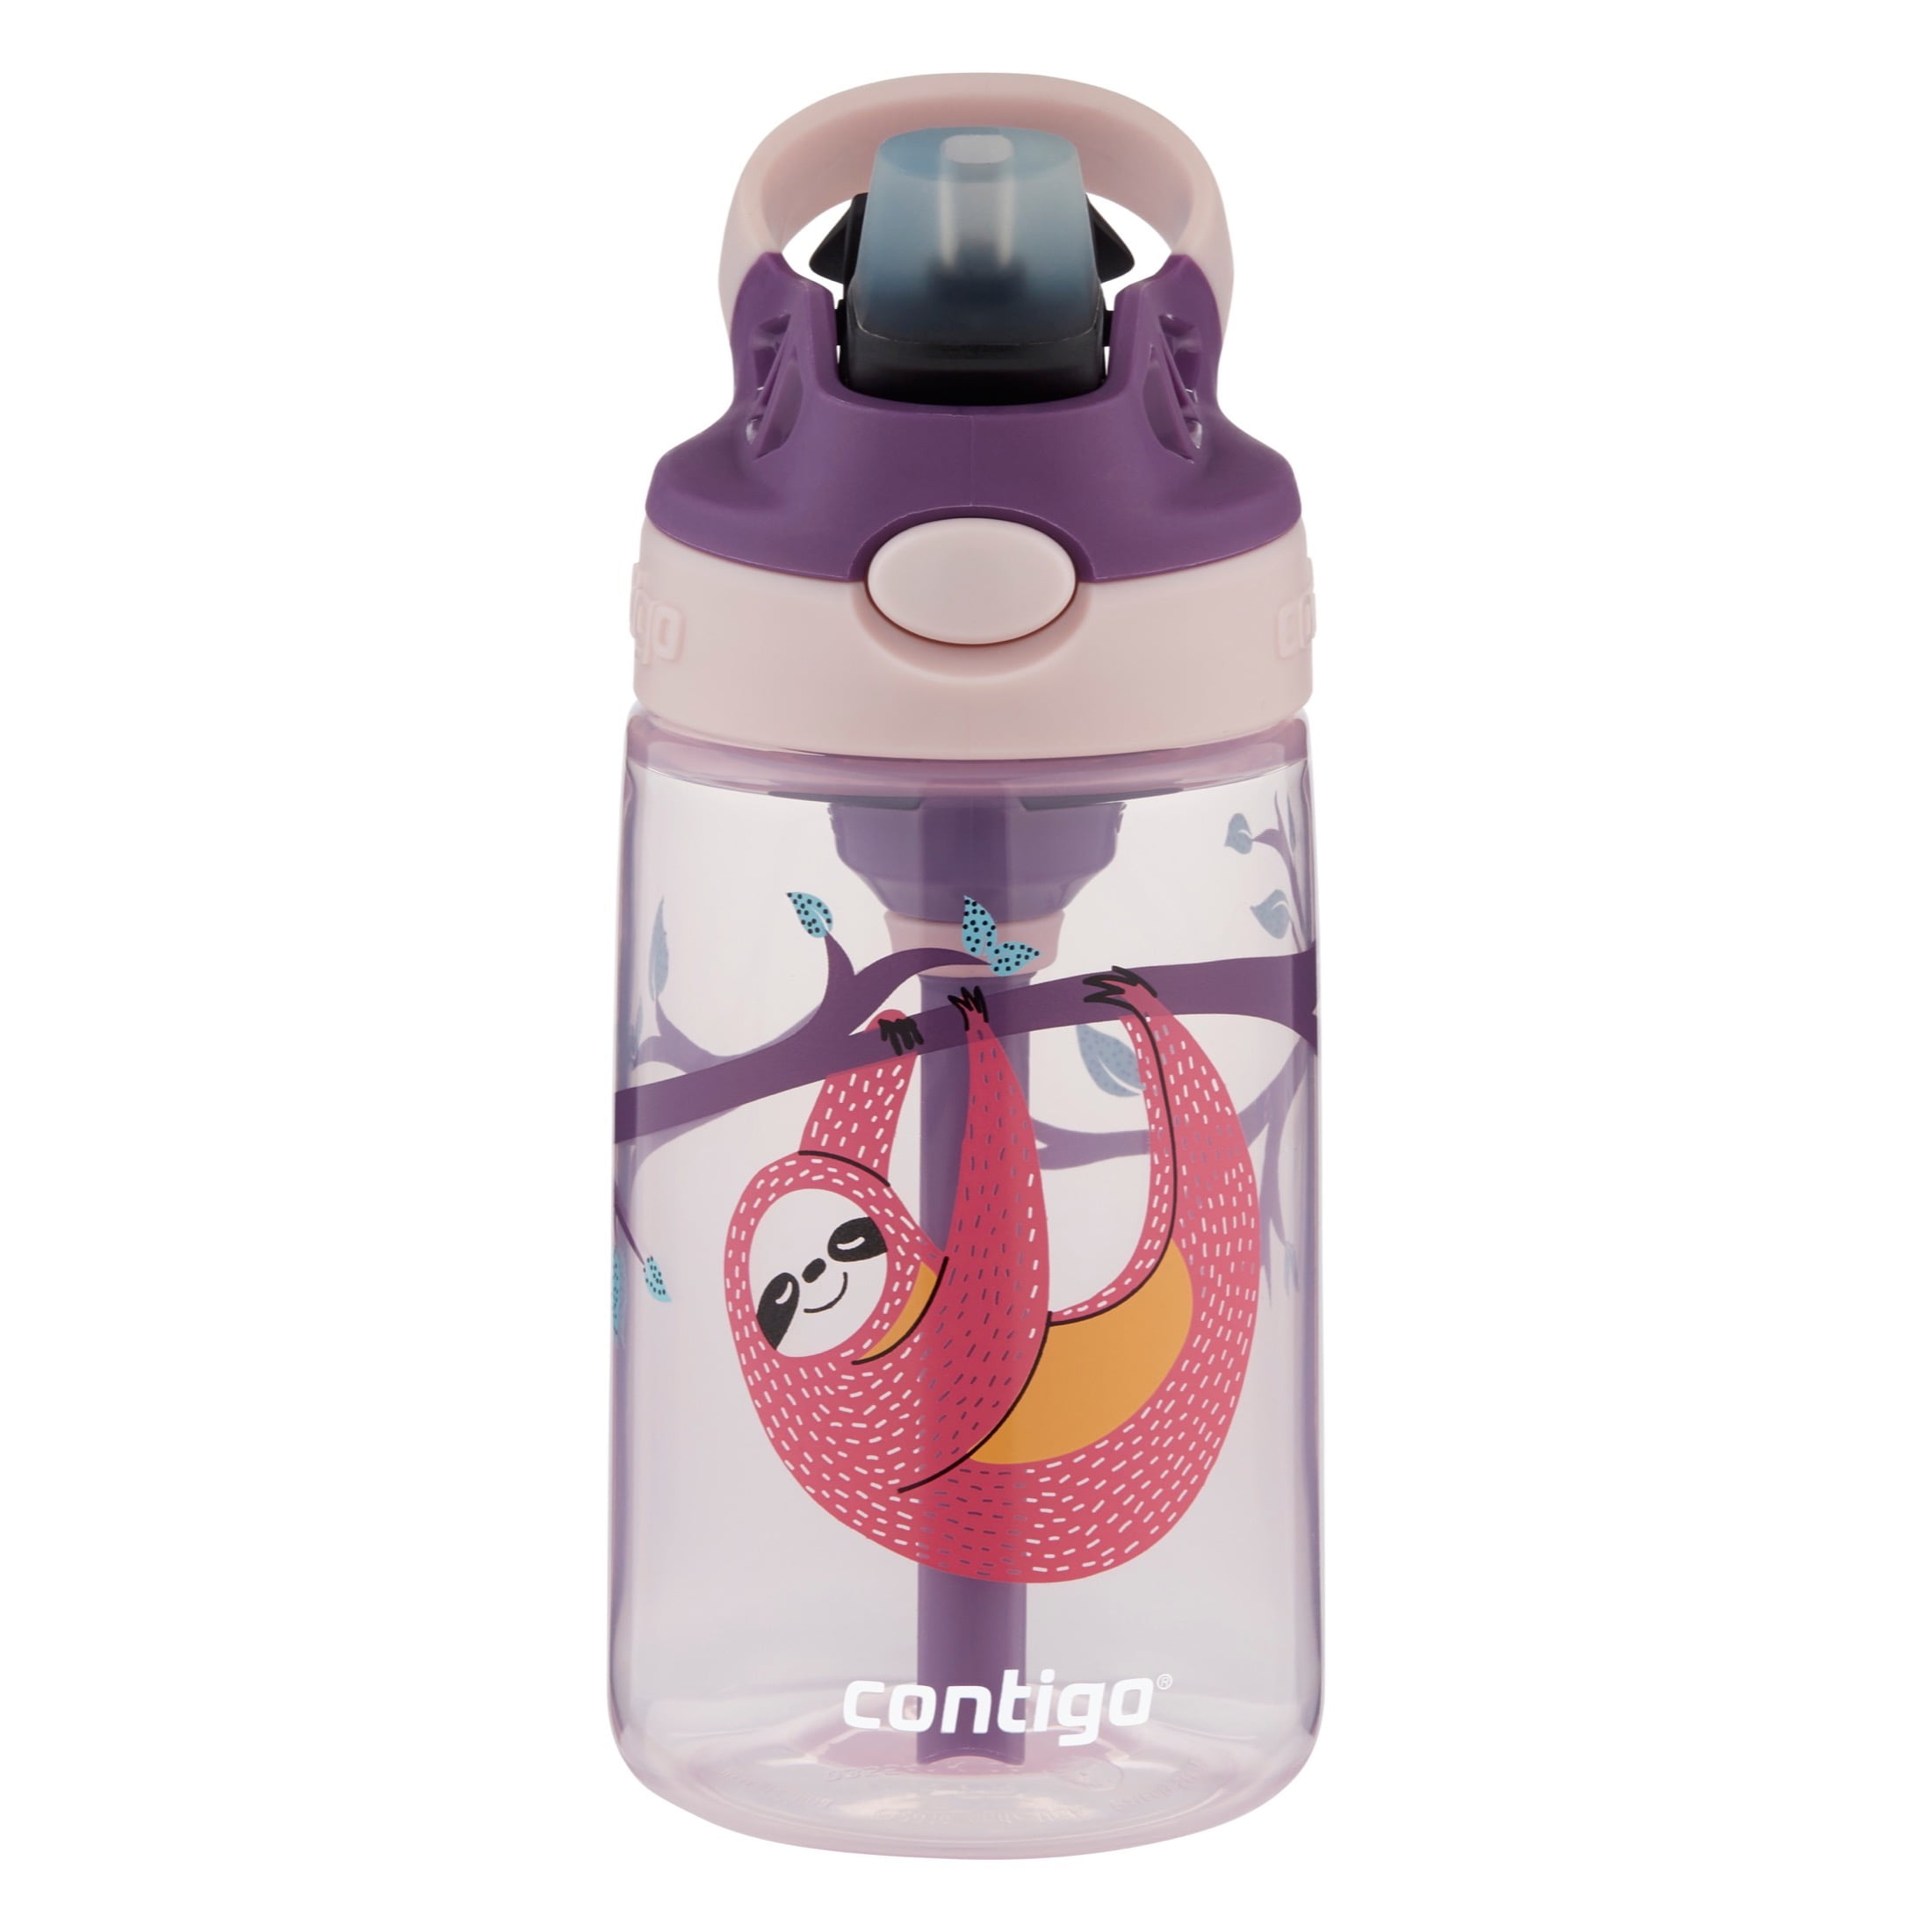 Contigo Kid's 14 Oz Autospout Straw Water Bottle - Blue Raspberry Hedgehog  : Target